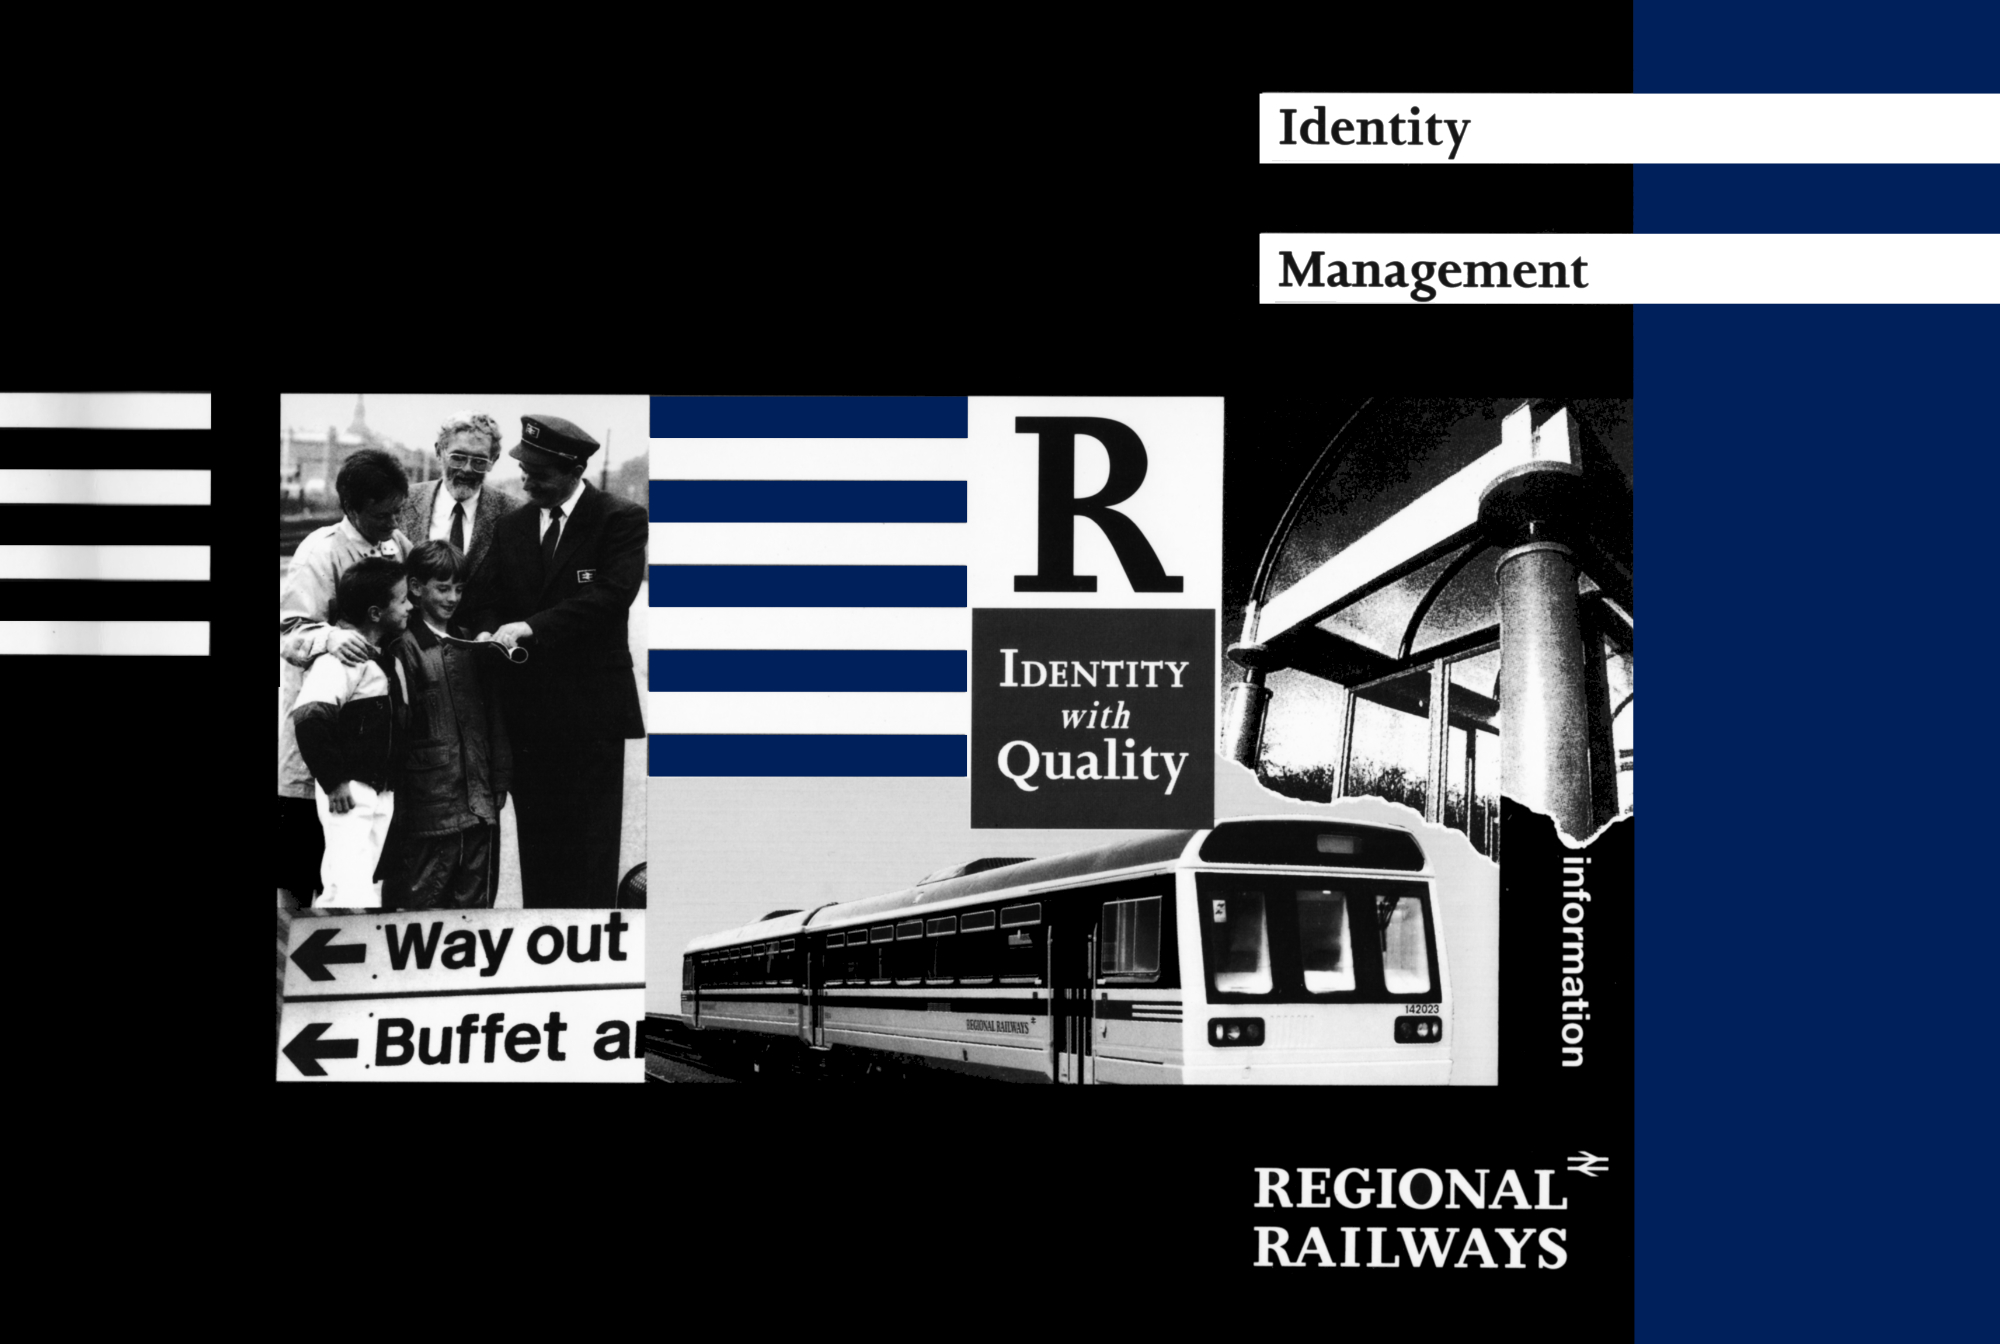 Regional Railways identity management